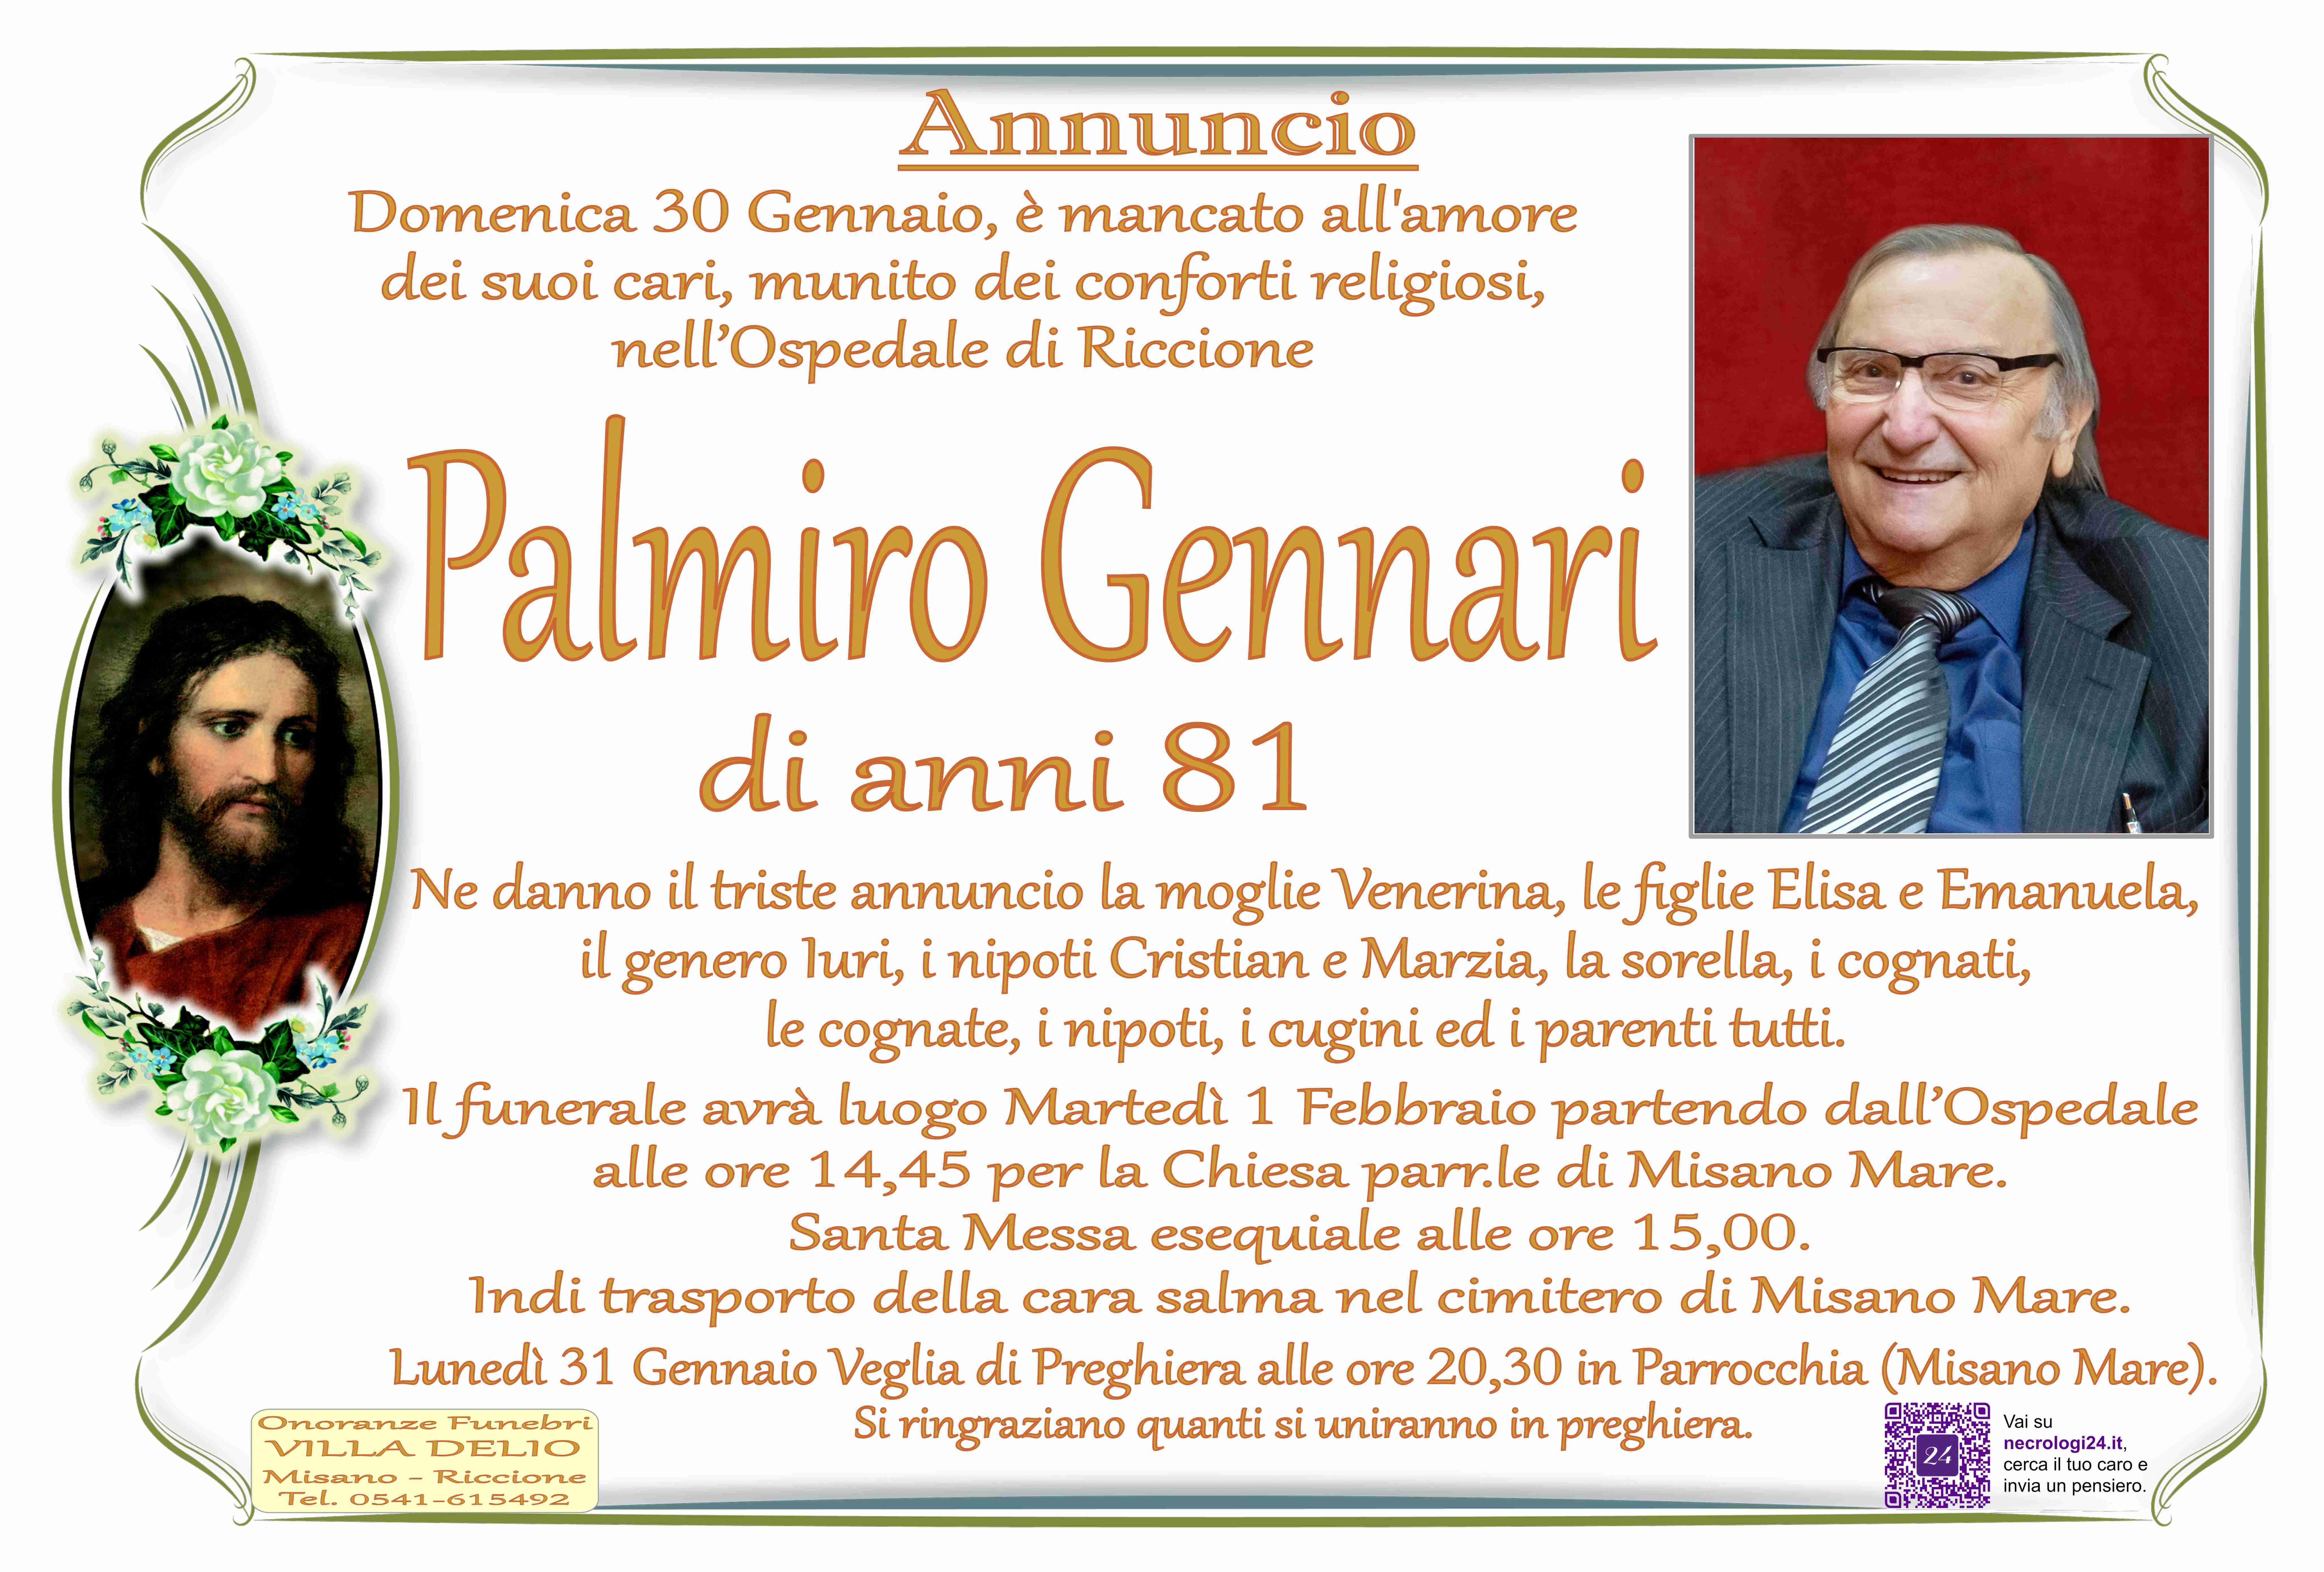 Palmiro Gennari